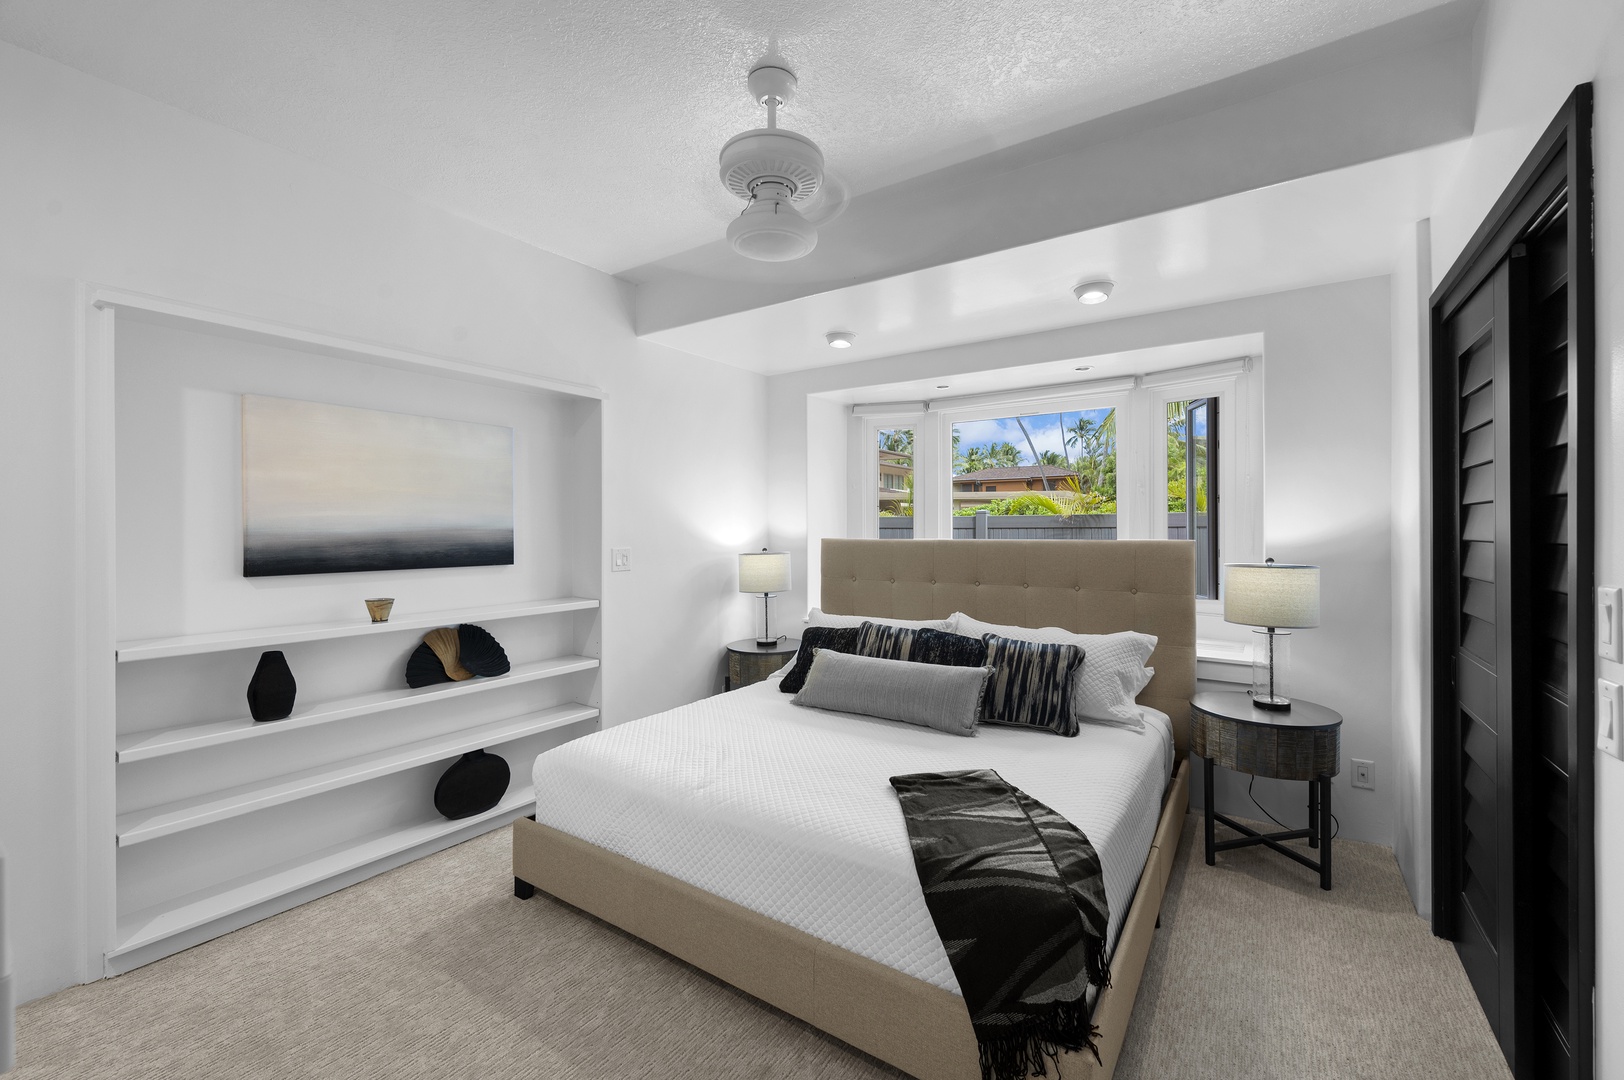 Kailua Vacation Rentals, Kailua Hale Kahakai - Guest Bedroom 3 has a king bed and garden views